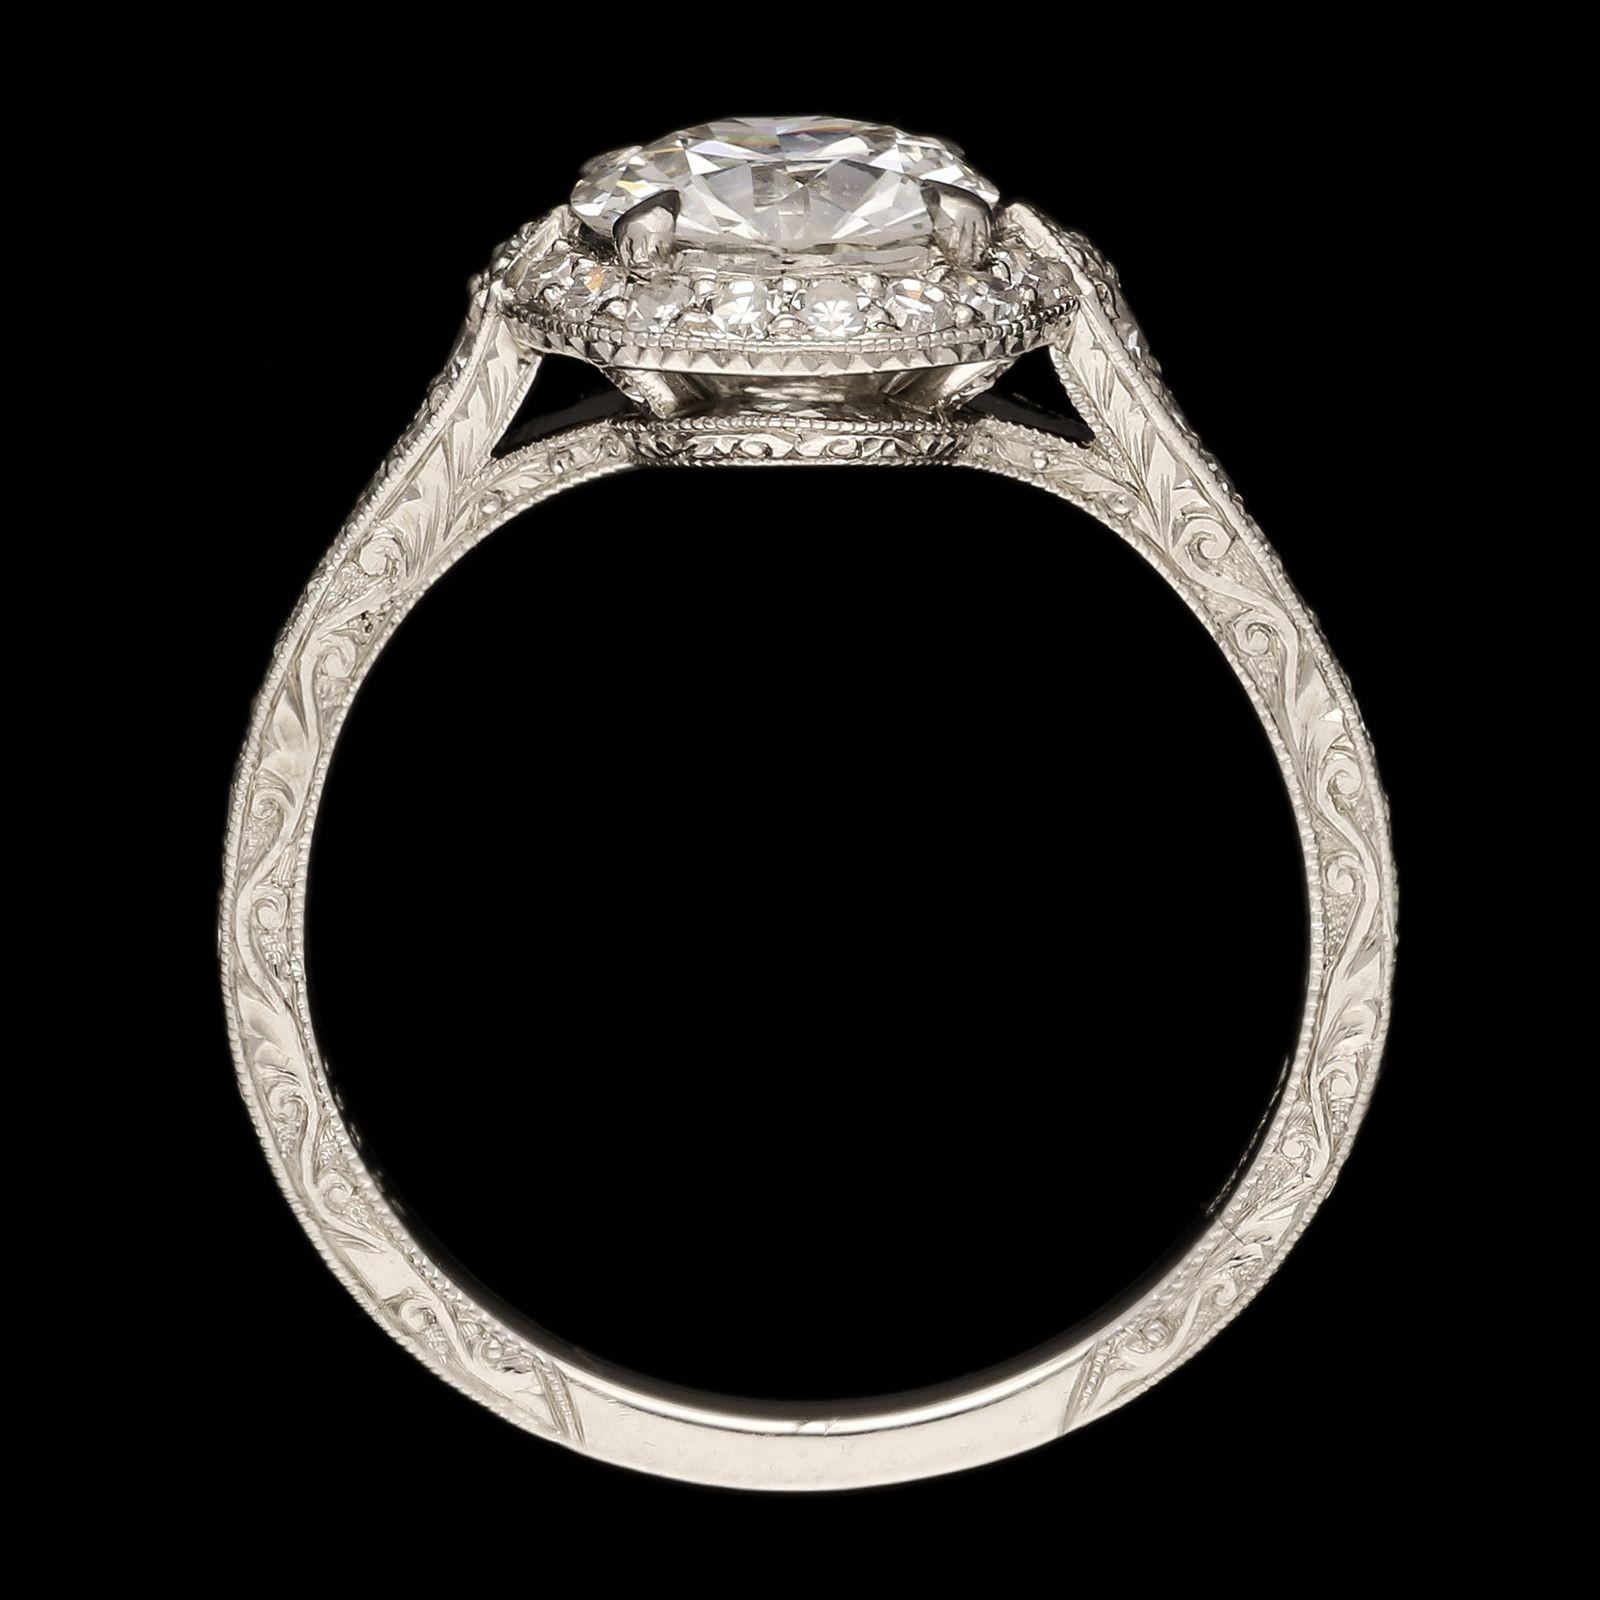 Hancocks Contemporary 1.28ct Brilliant Cut Diamond Ring With Halo Surround (Bague en diamant taillé en brillant avec entourage en halo) Neuf - En vente à London, GB